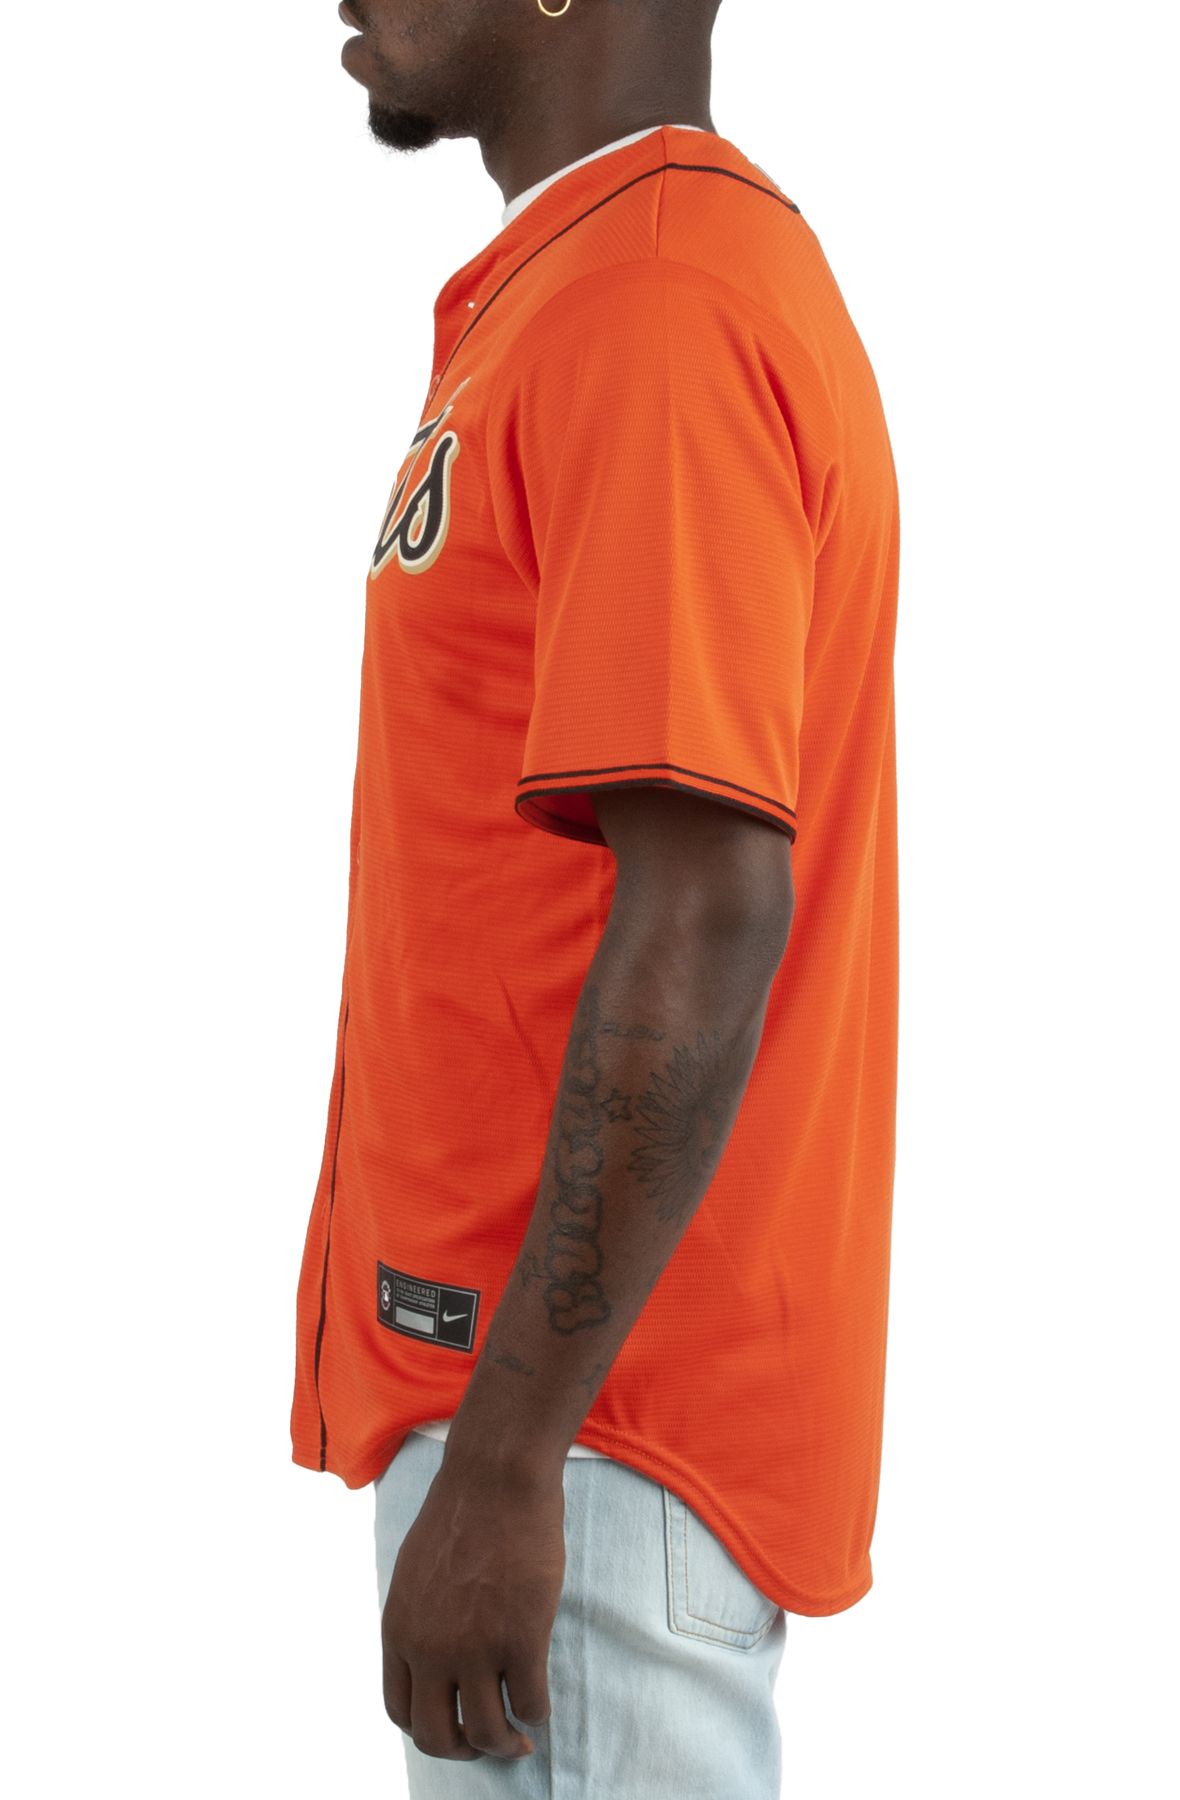 San Francisco Giants Alternate Replica Team Jersey - Orange